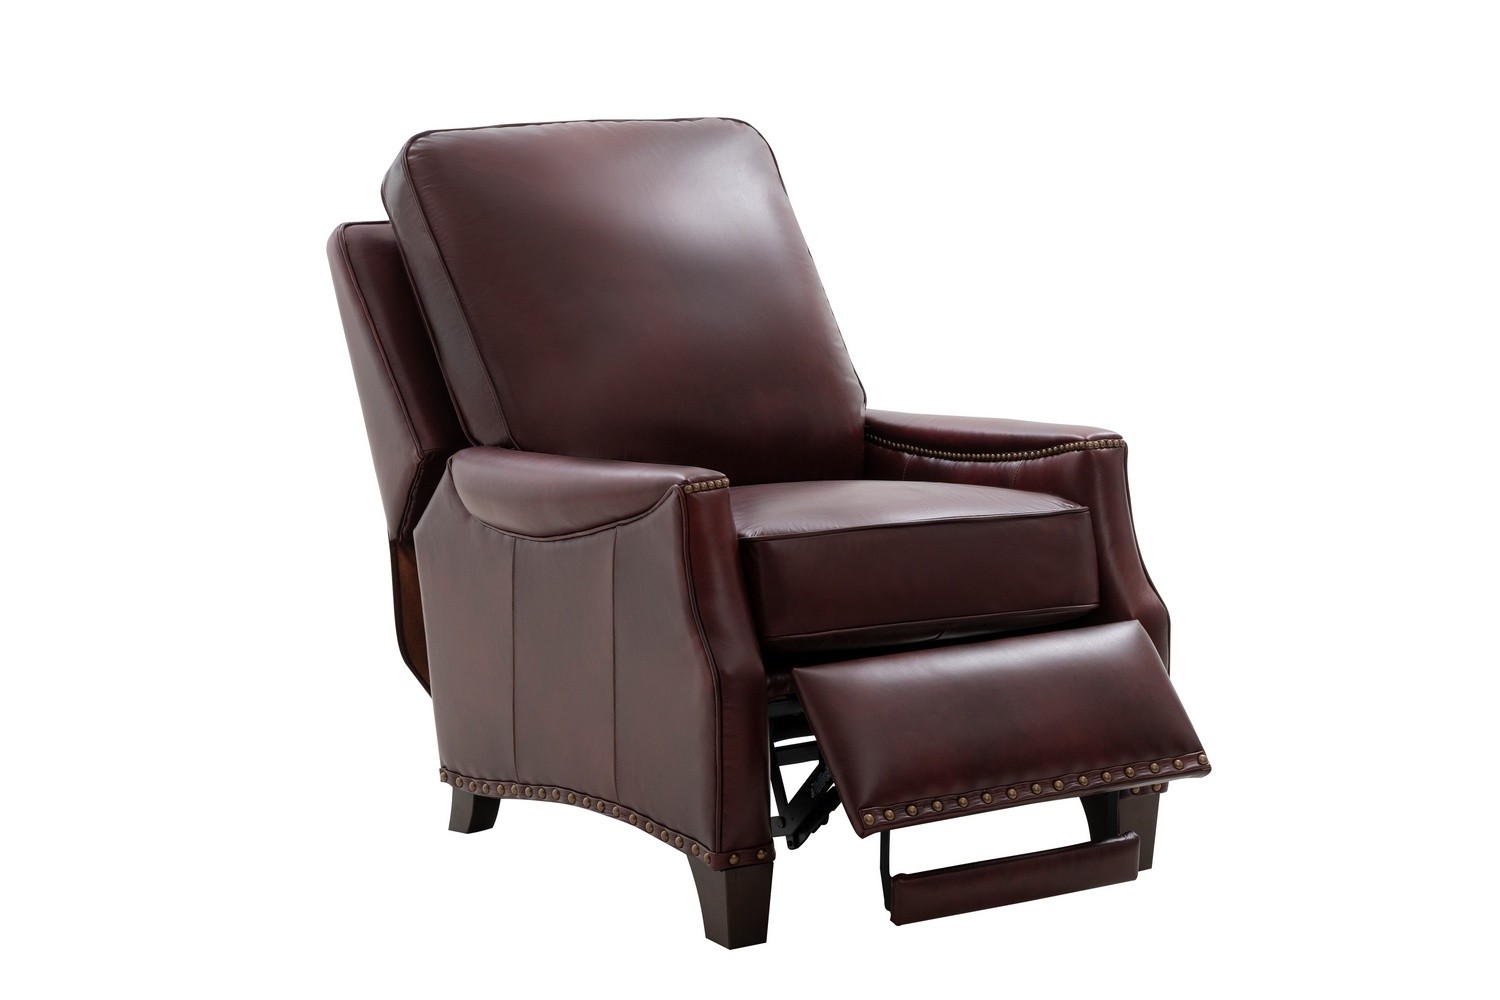 Barcalounger Ellis Recliner Chair - Emerson Sangria/Top Grain Leather